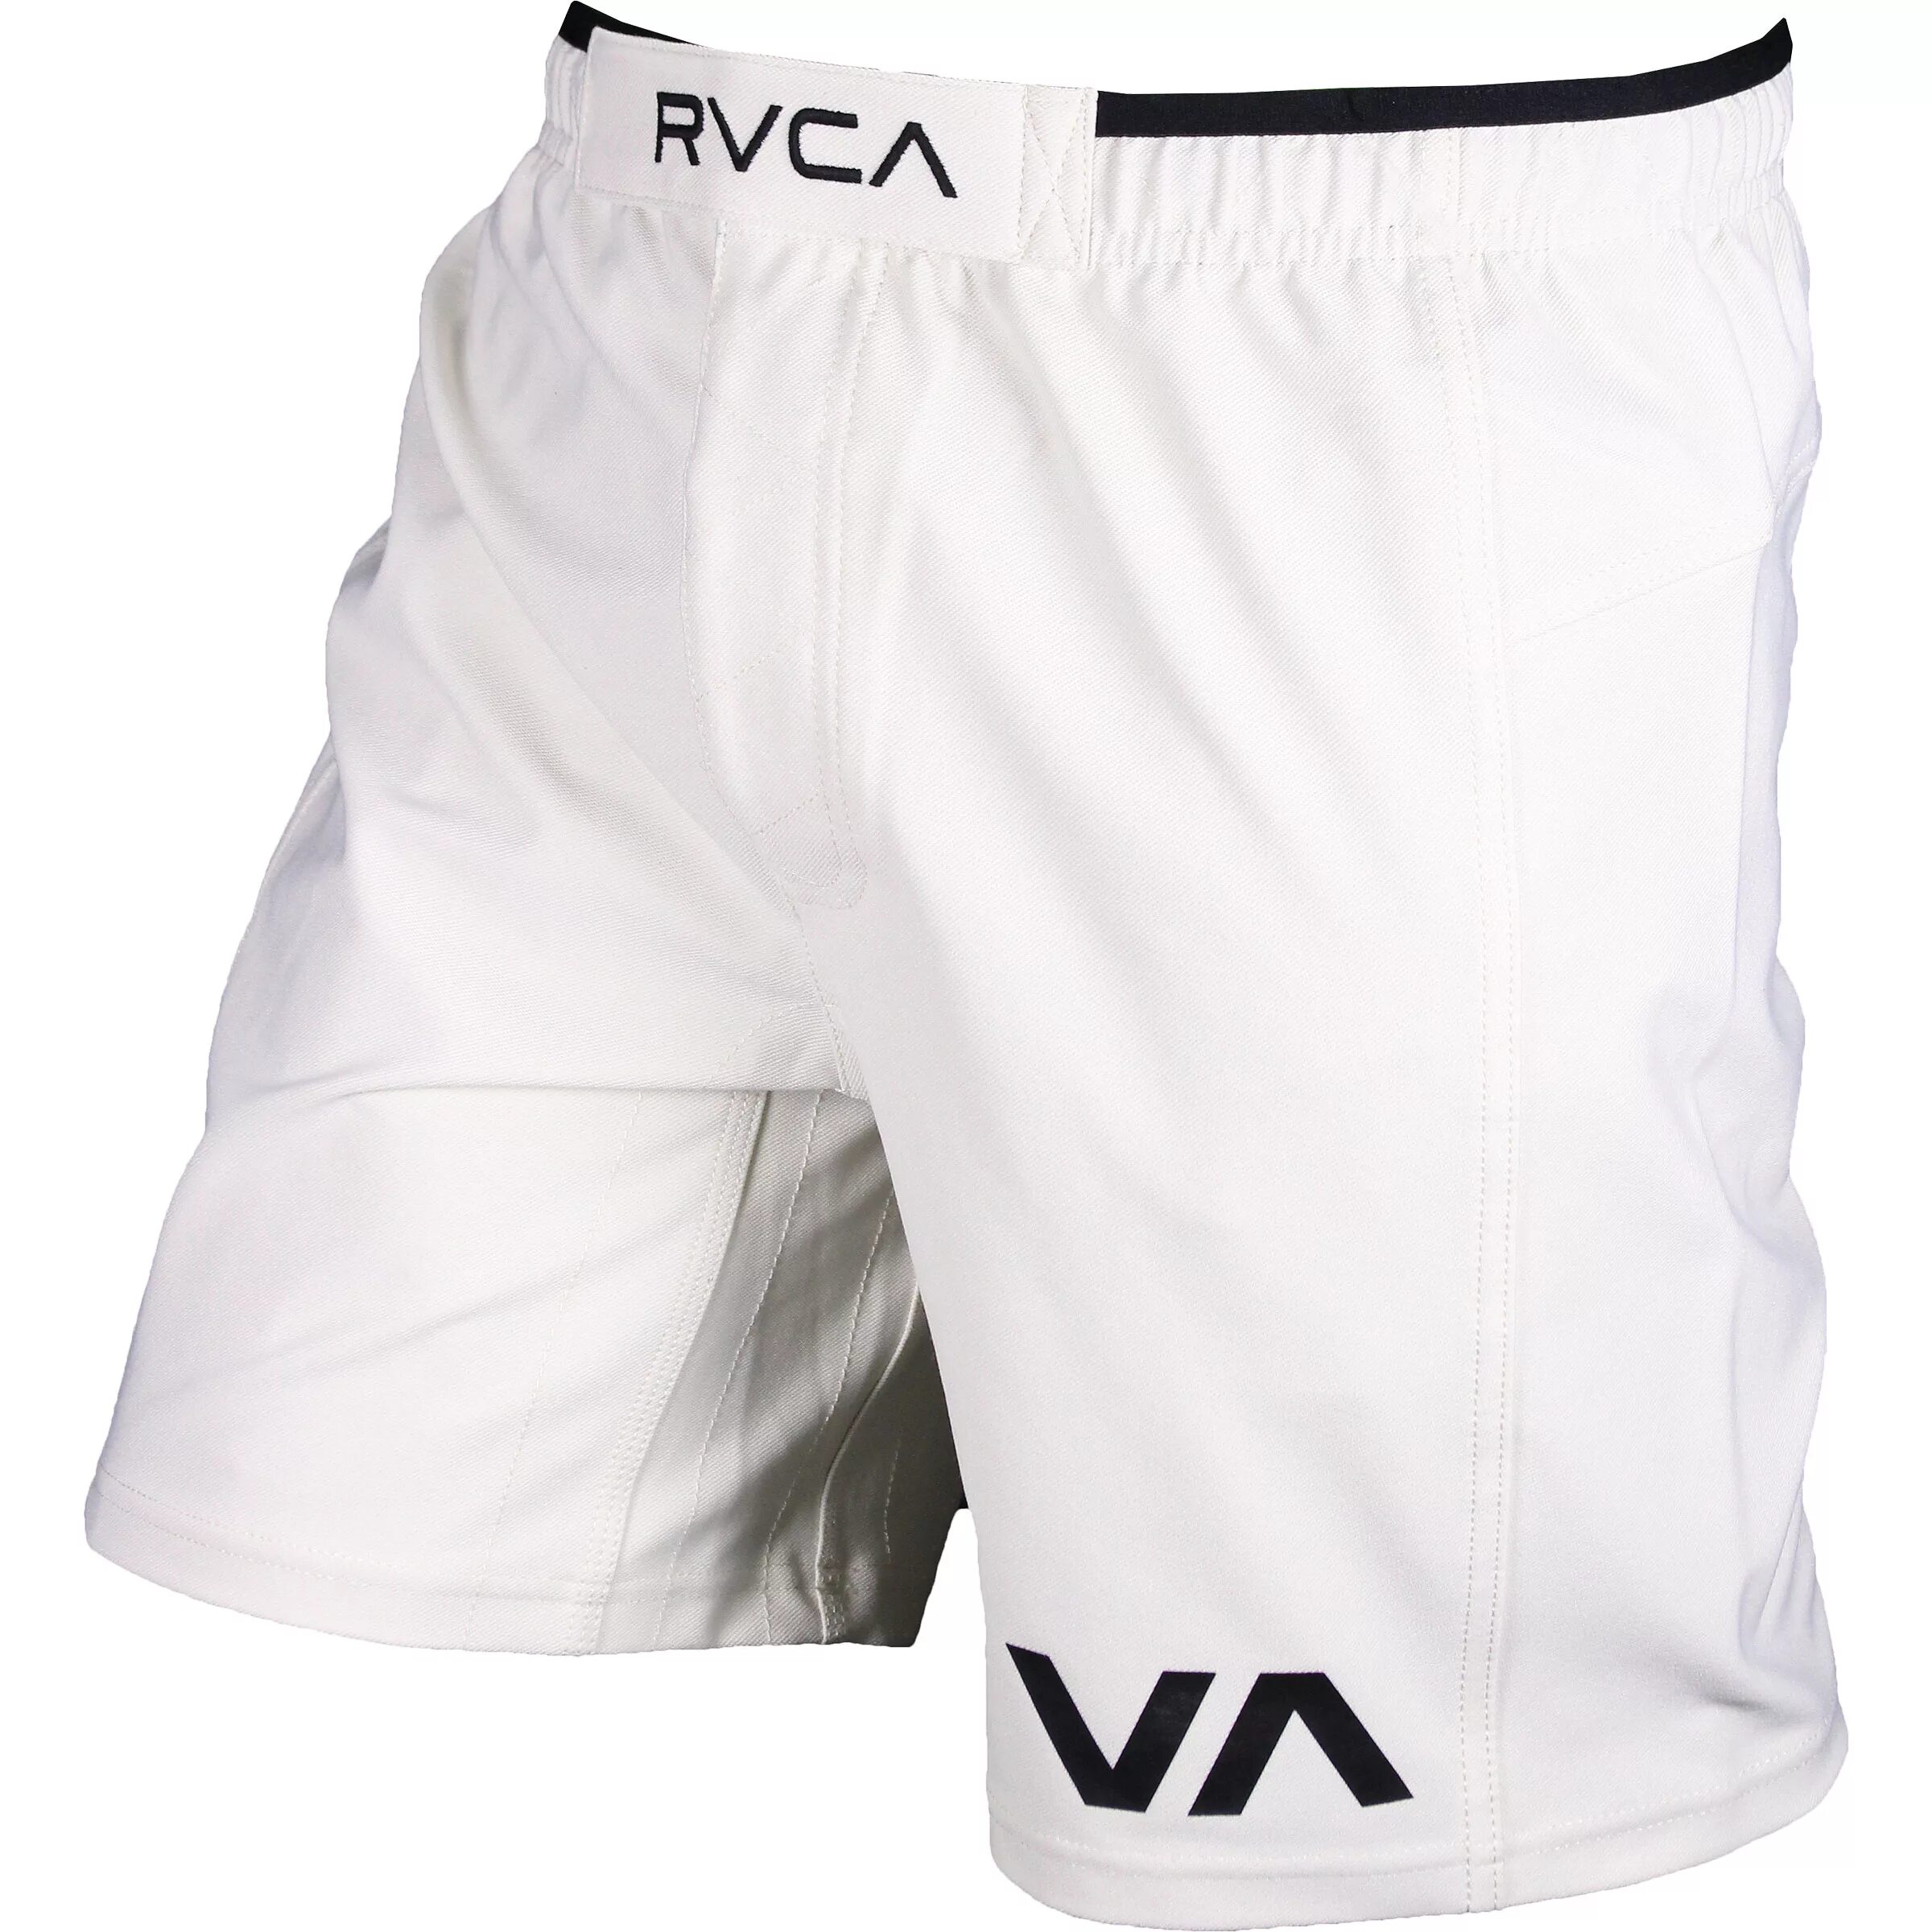 Мужские штаны rvca. Шорты RVCA Grappler Elastic. RVCA MMA shorts. Шорты ММА белые. Шорты MMA White Gold.